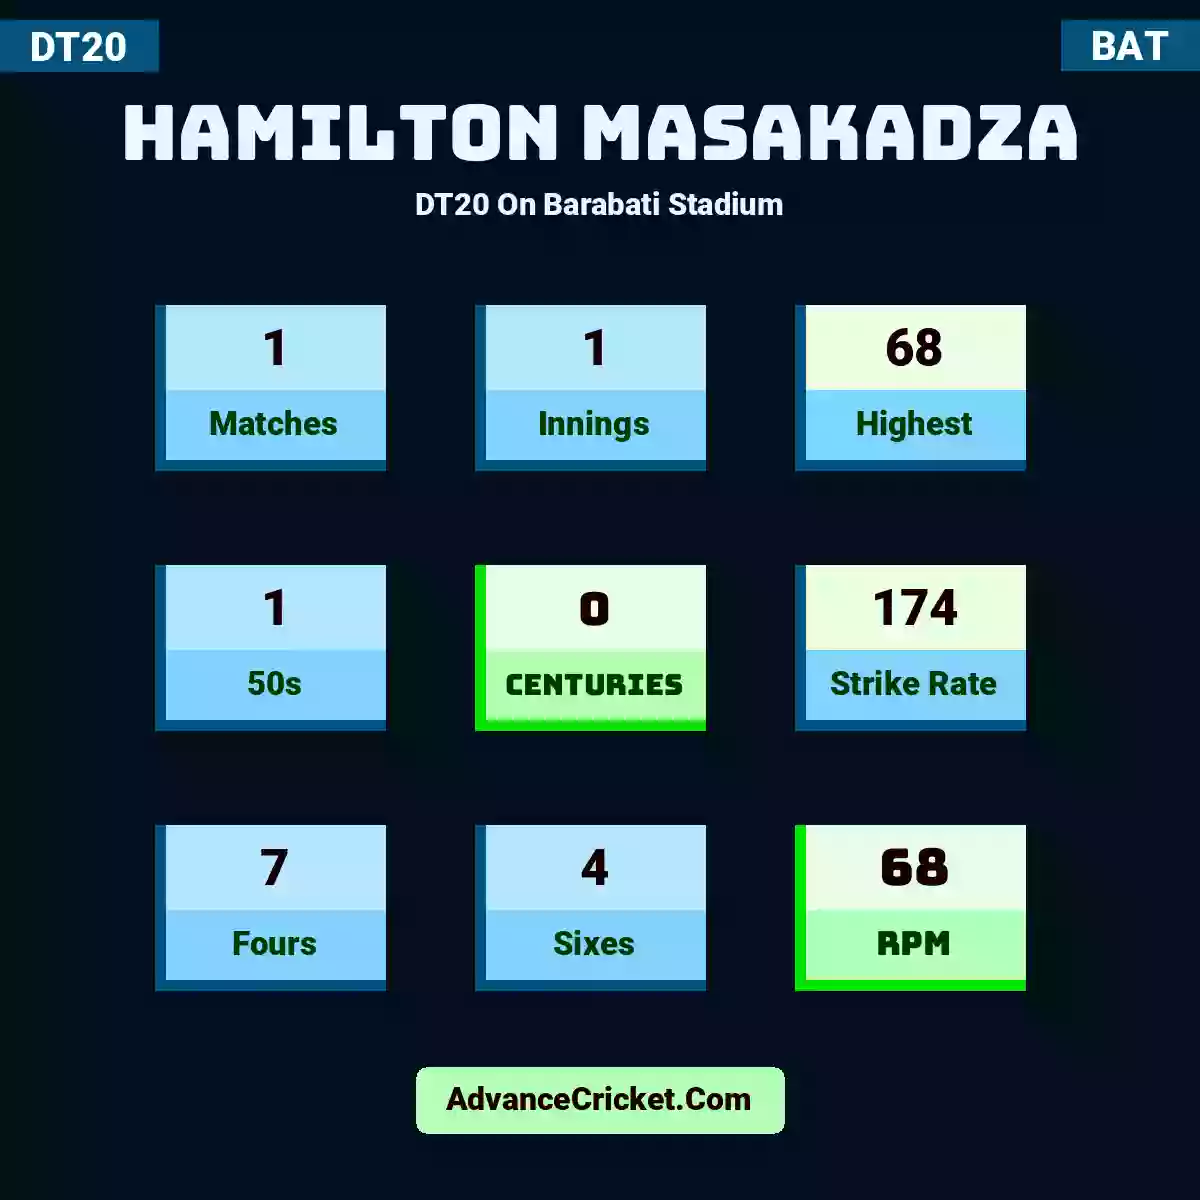 Hamilton Masakadza DT20  On Barabati Stadium, Hamilton Masakadza played 1 matches, scored 68 runs as highest, 1 half-centuries, and 0 centuries, with a strike rate of 174. H.Masakadza hit 7 fours and 4 sixes, with an RPM of 68.